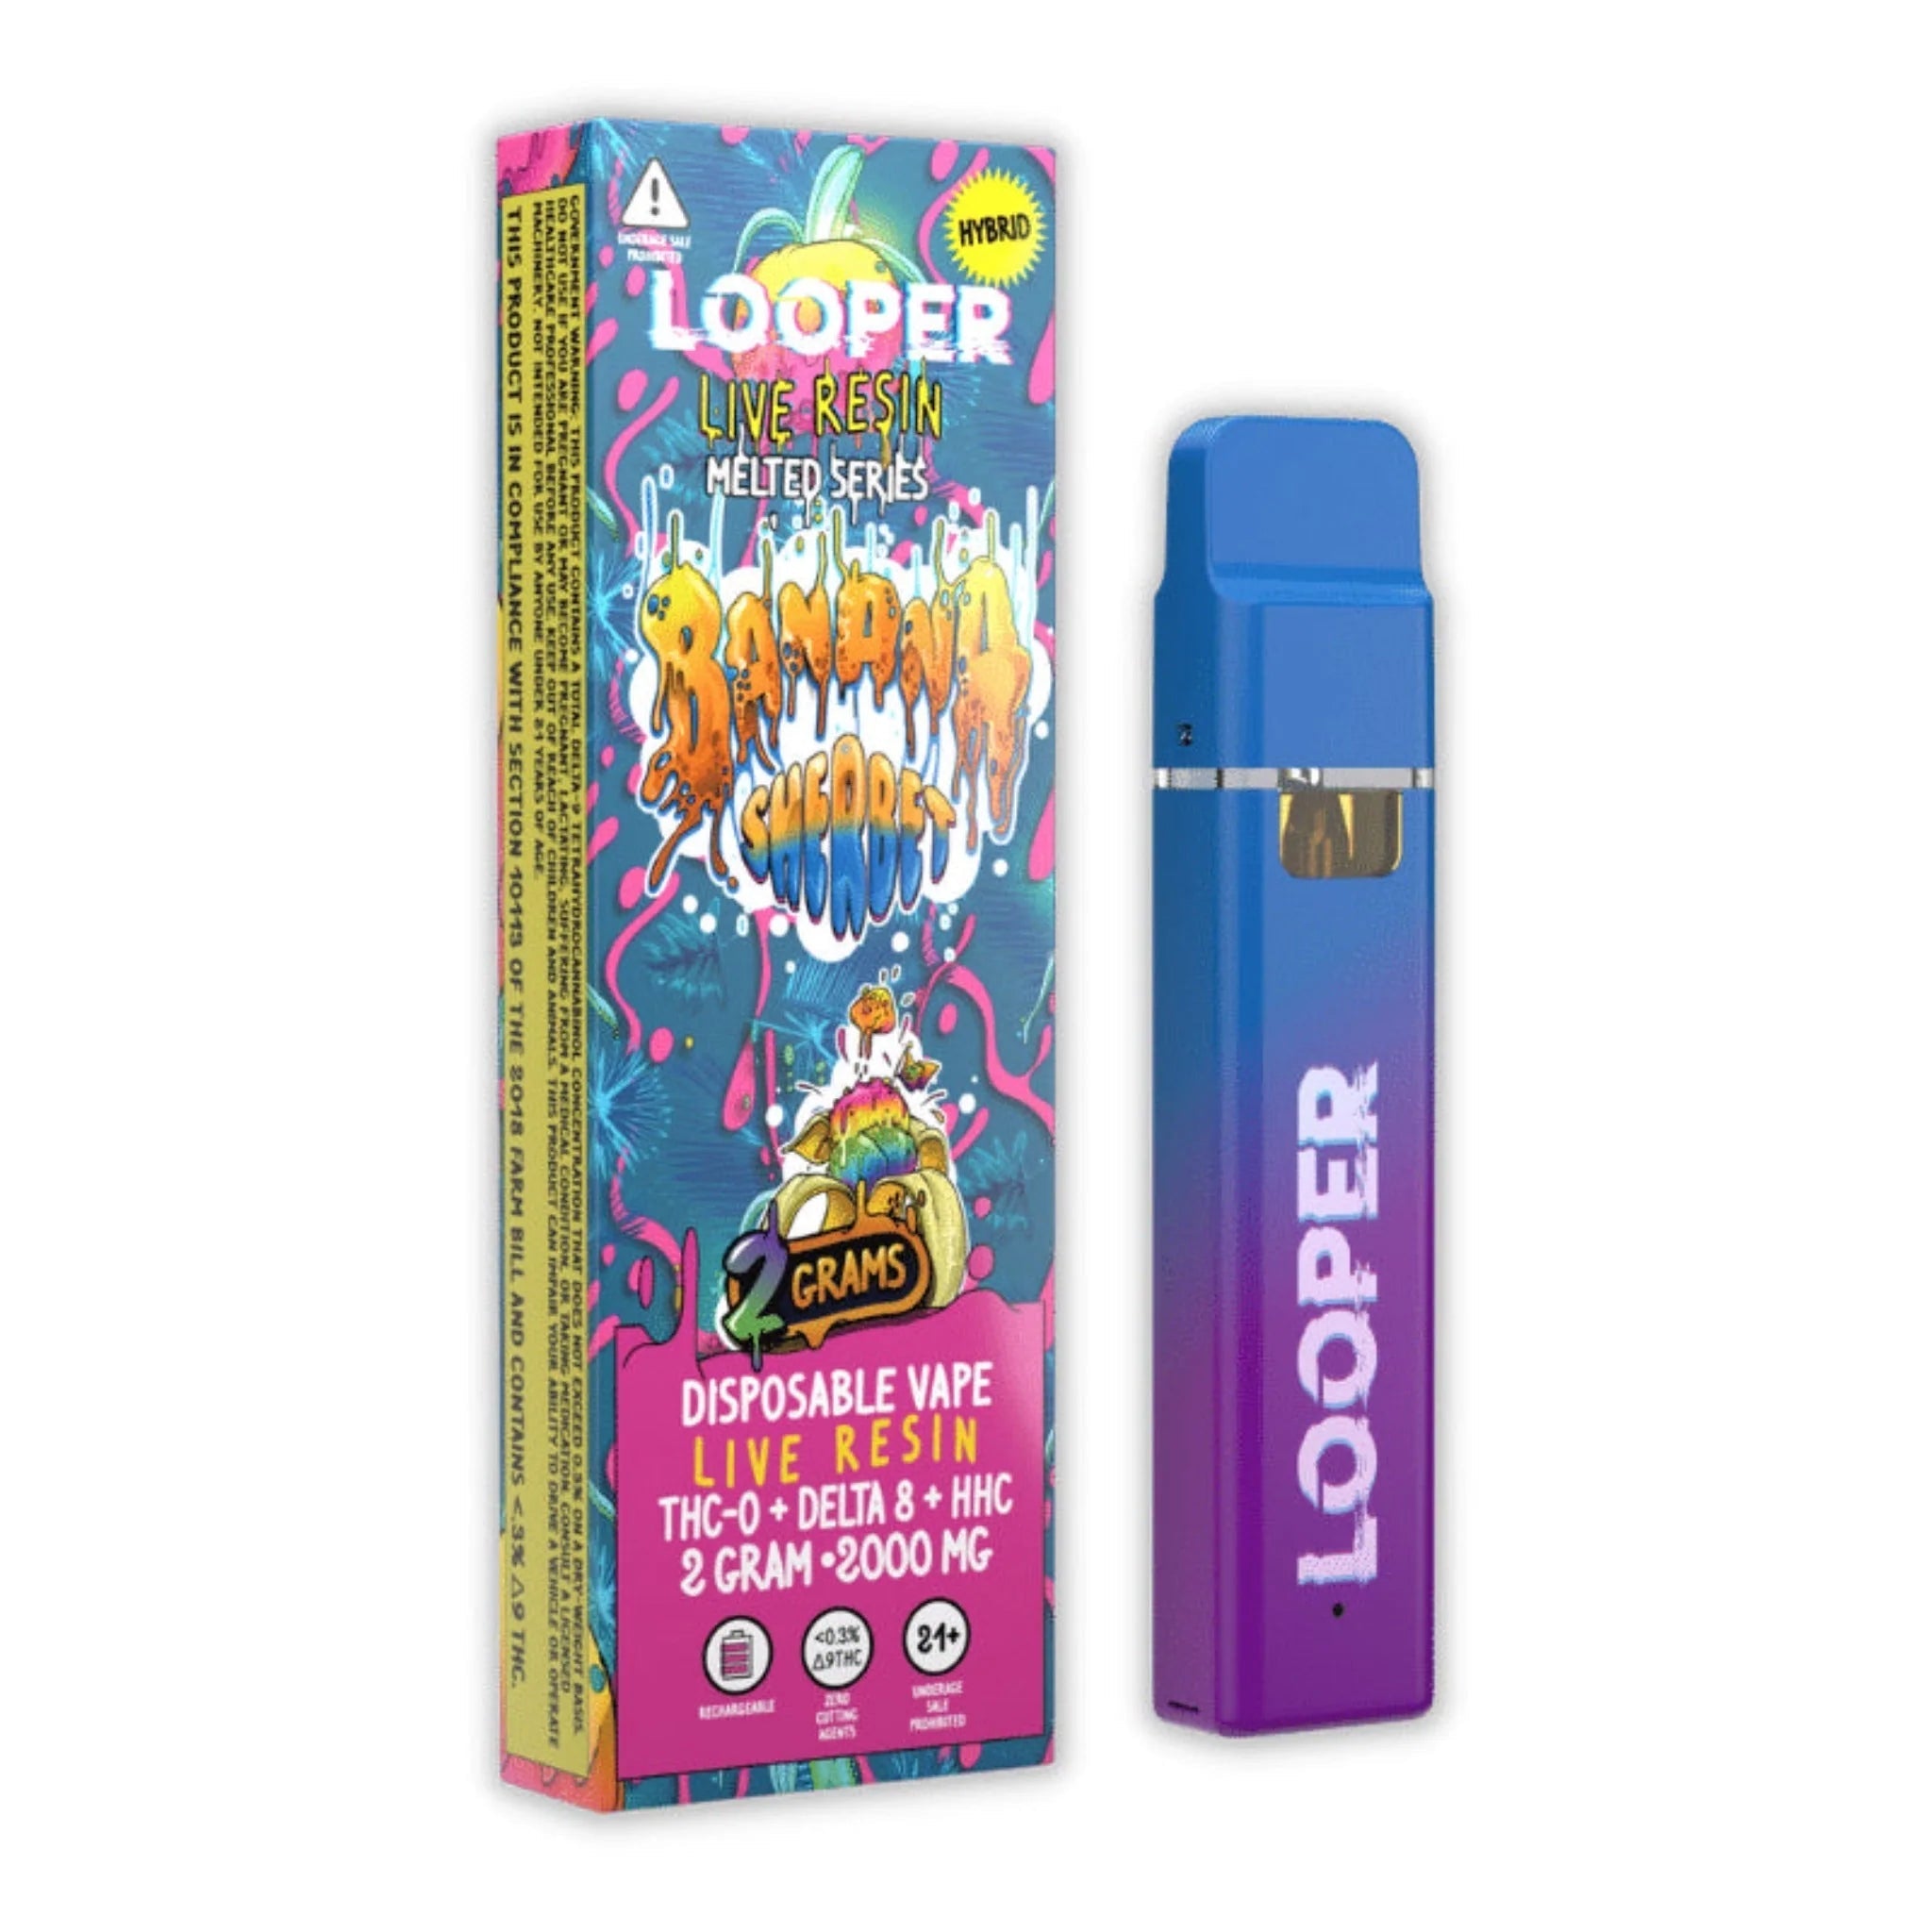 Looper Melted Series Live Resin Disposable Vape 2000mg 02 gram | Pack of 10